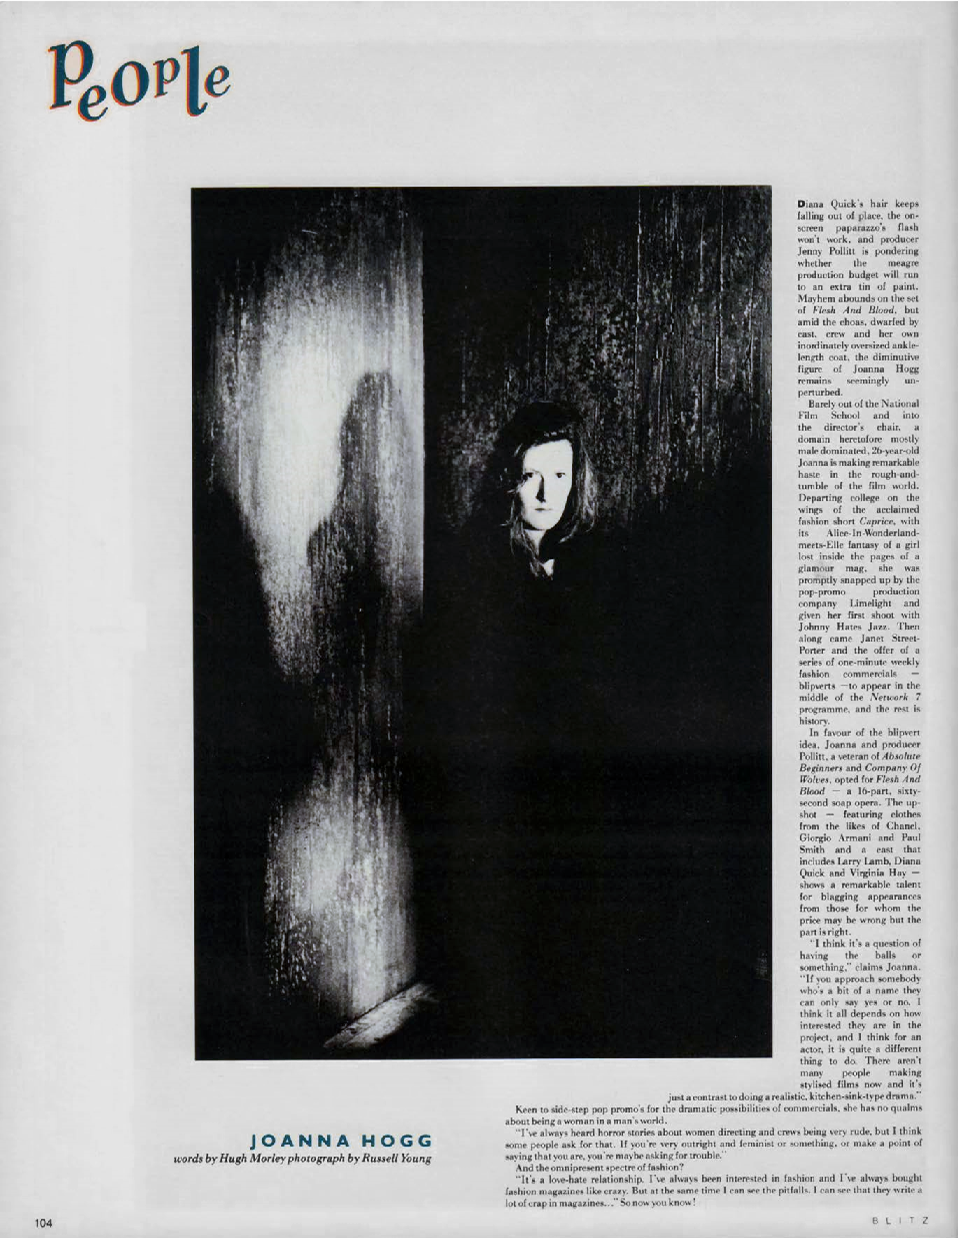 BLITZ 54 Jun 1987 Joanna Hogg interview by Hugh Morley photograph by Russell Young